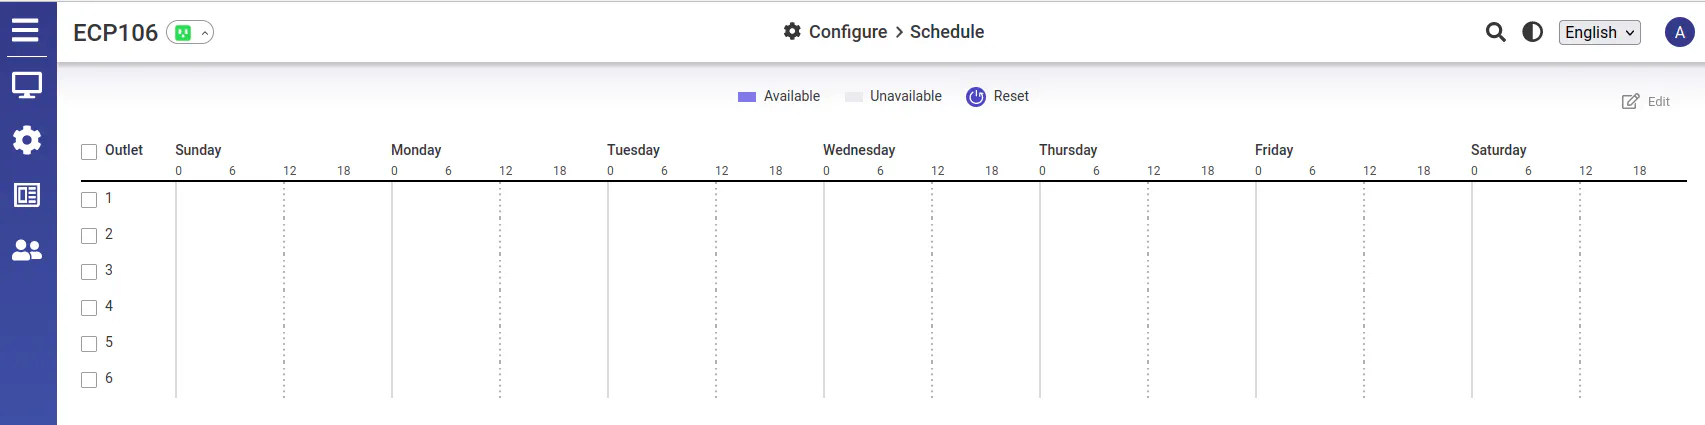 Standalone Configure Schedule